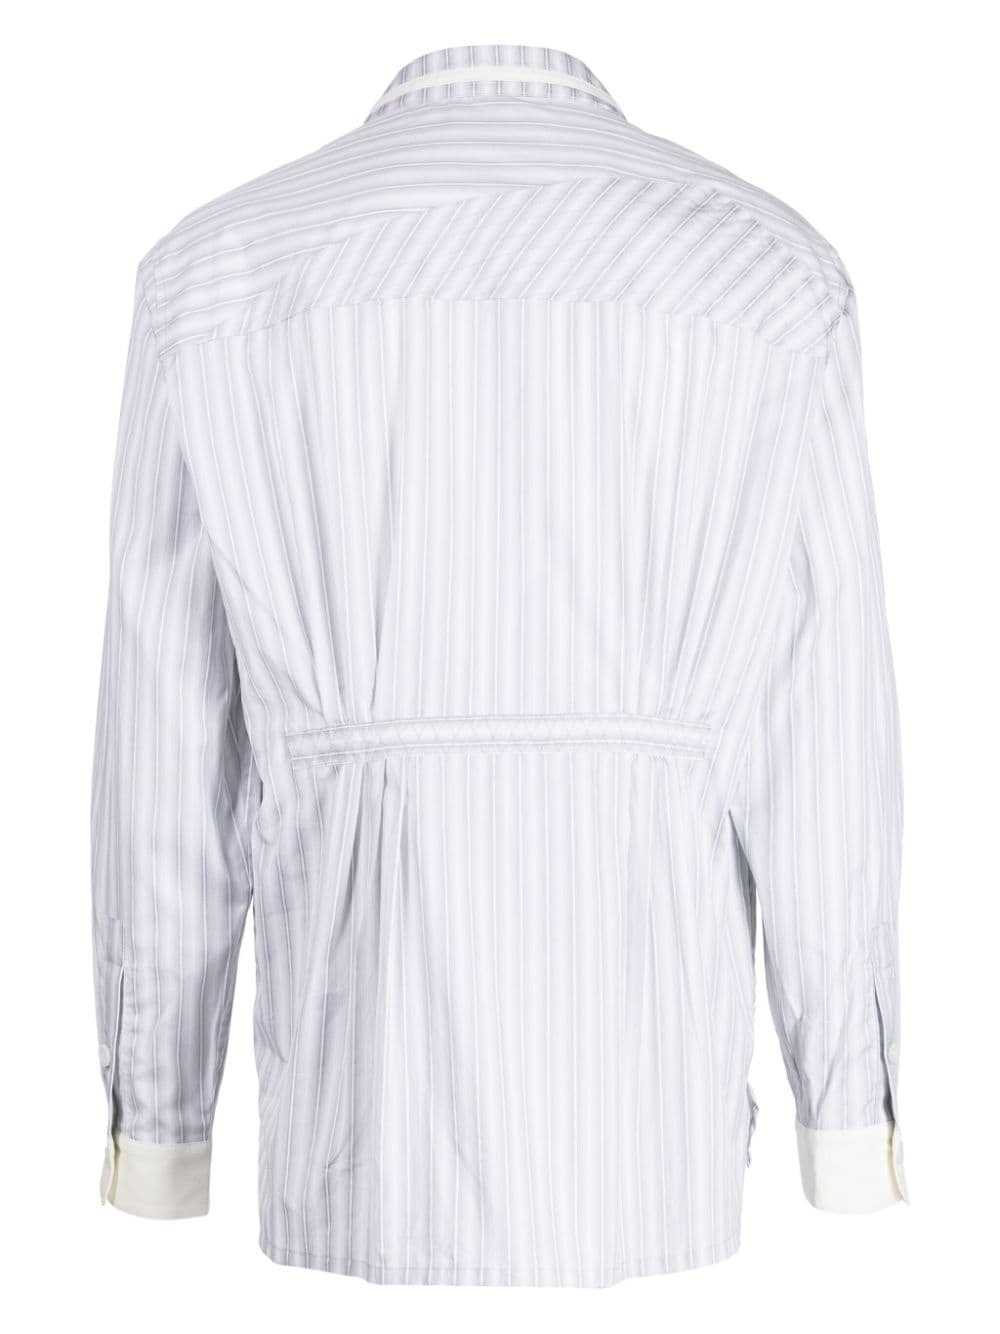 Aspasia striped asymmetric shirt - 2